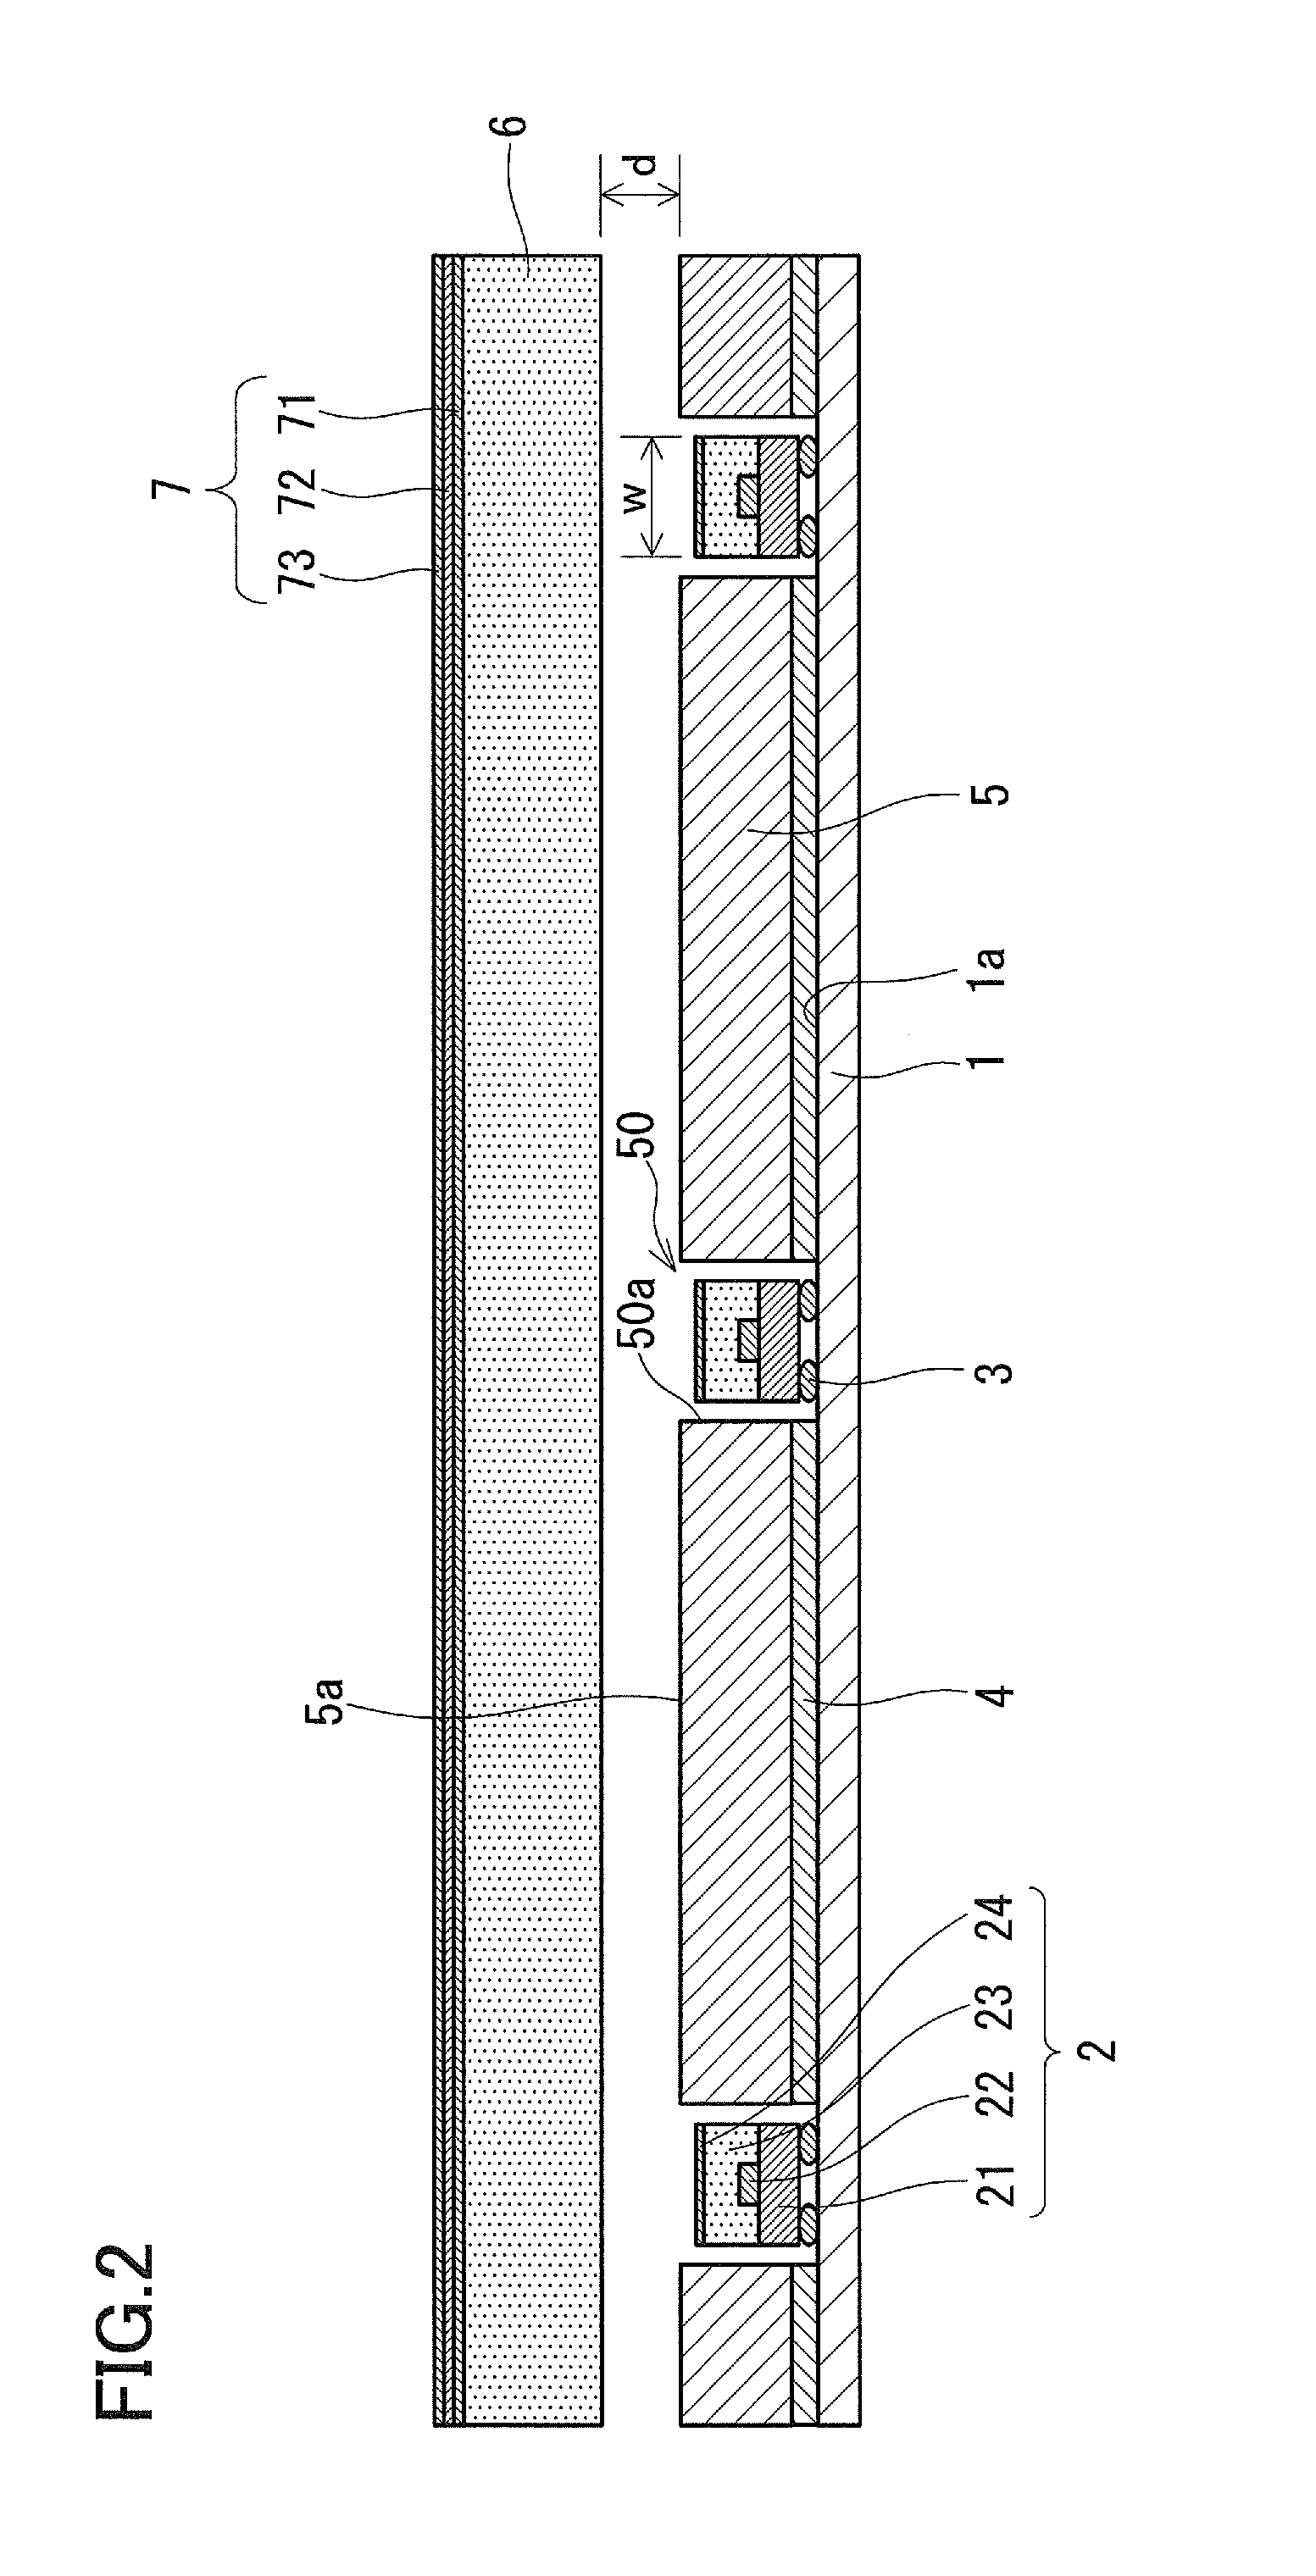 Planar illumination device and liquid crystal display